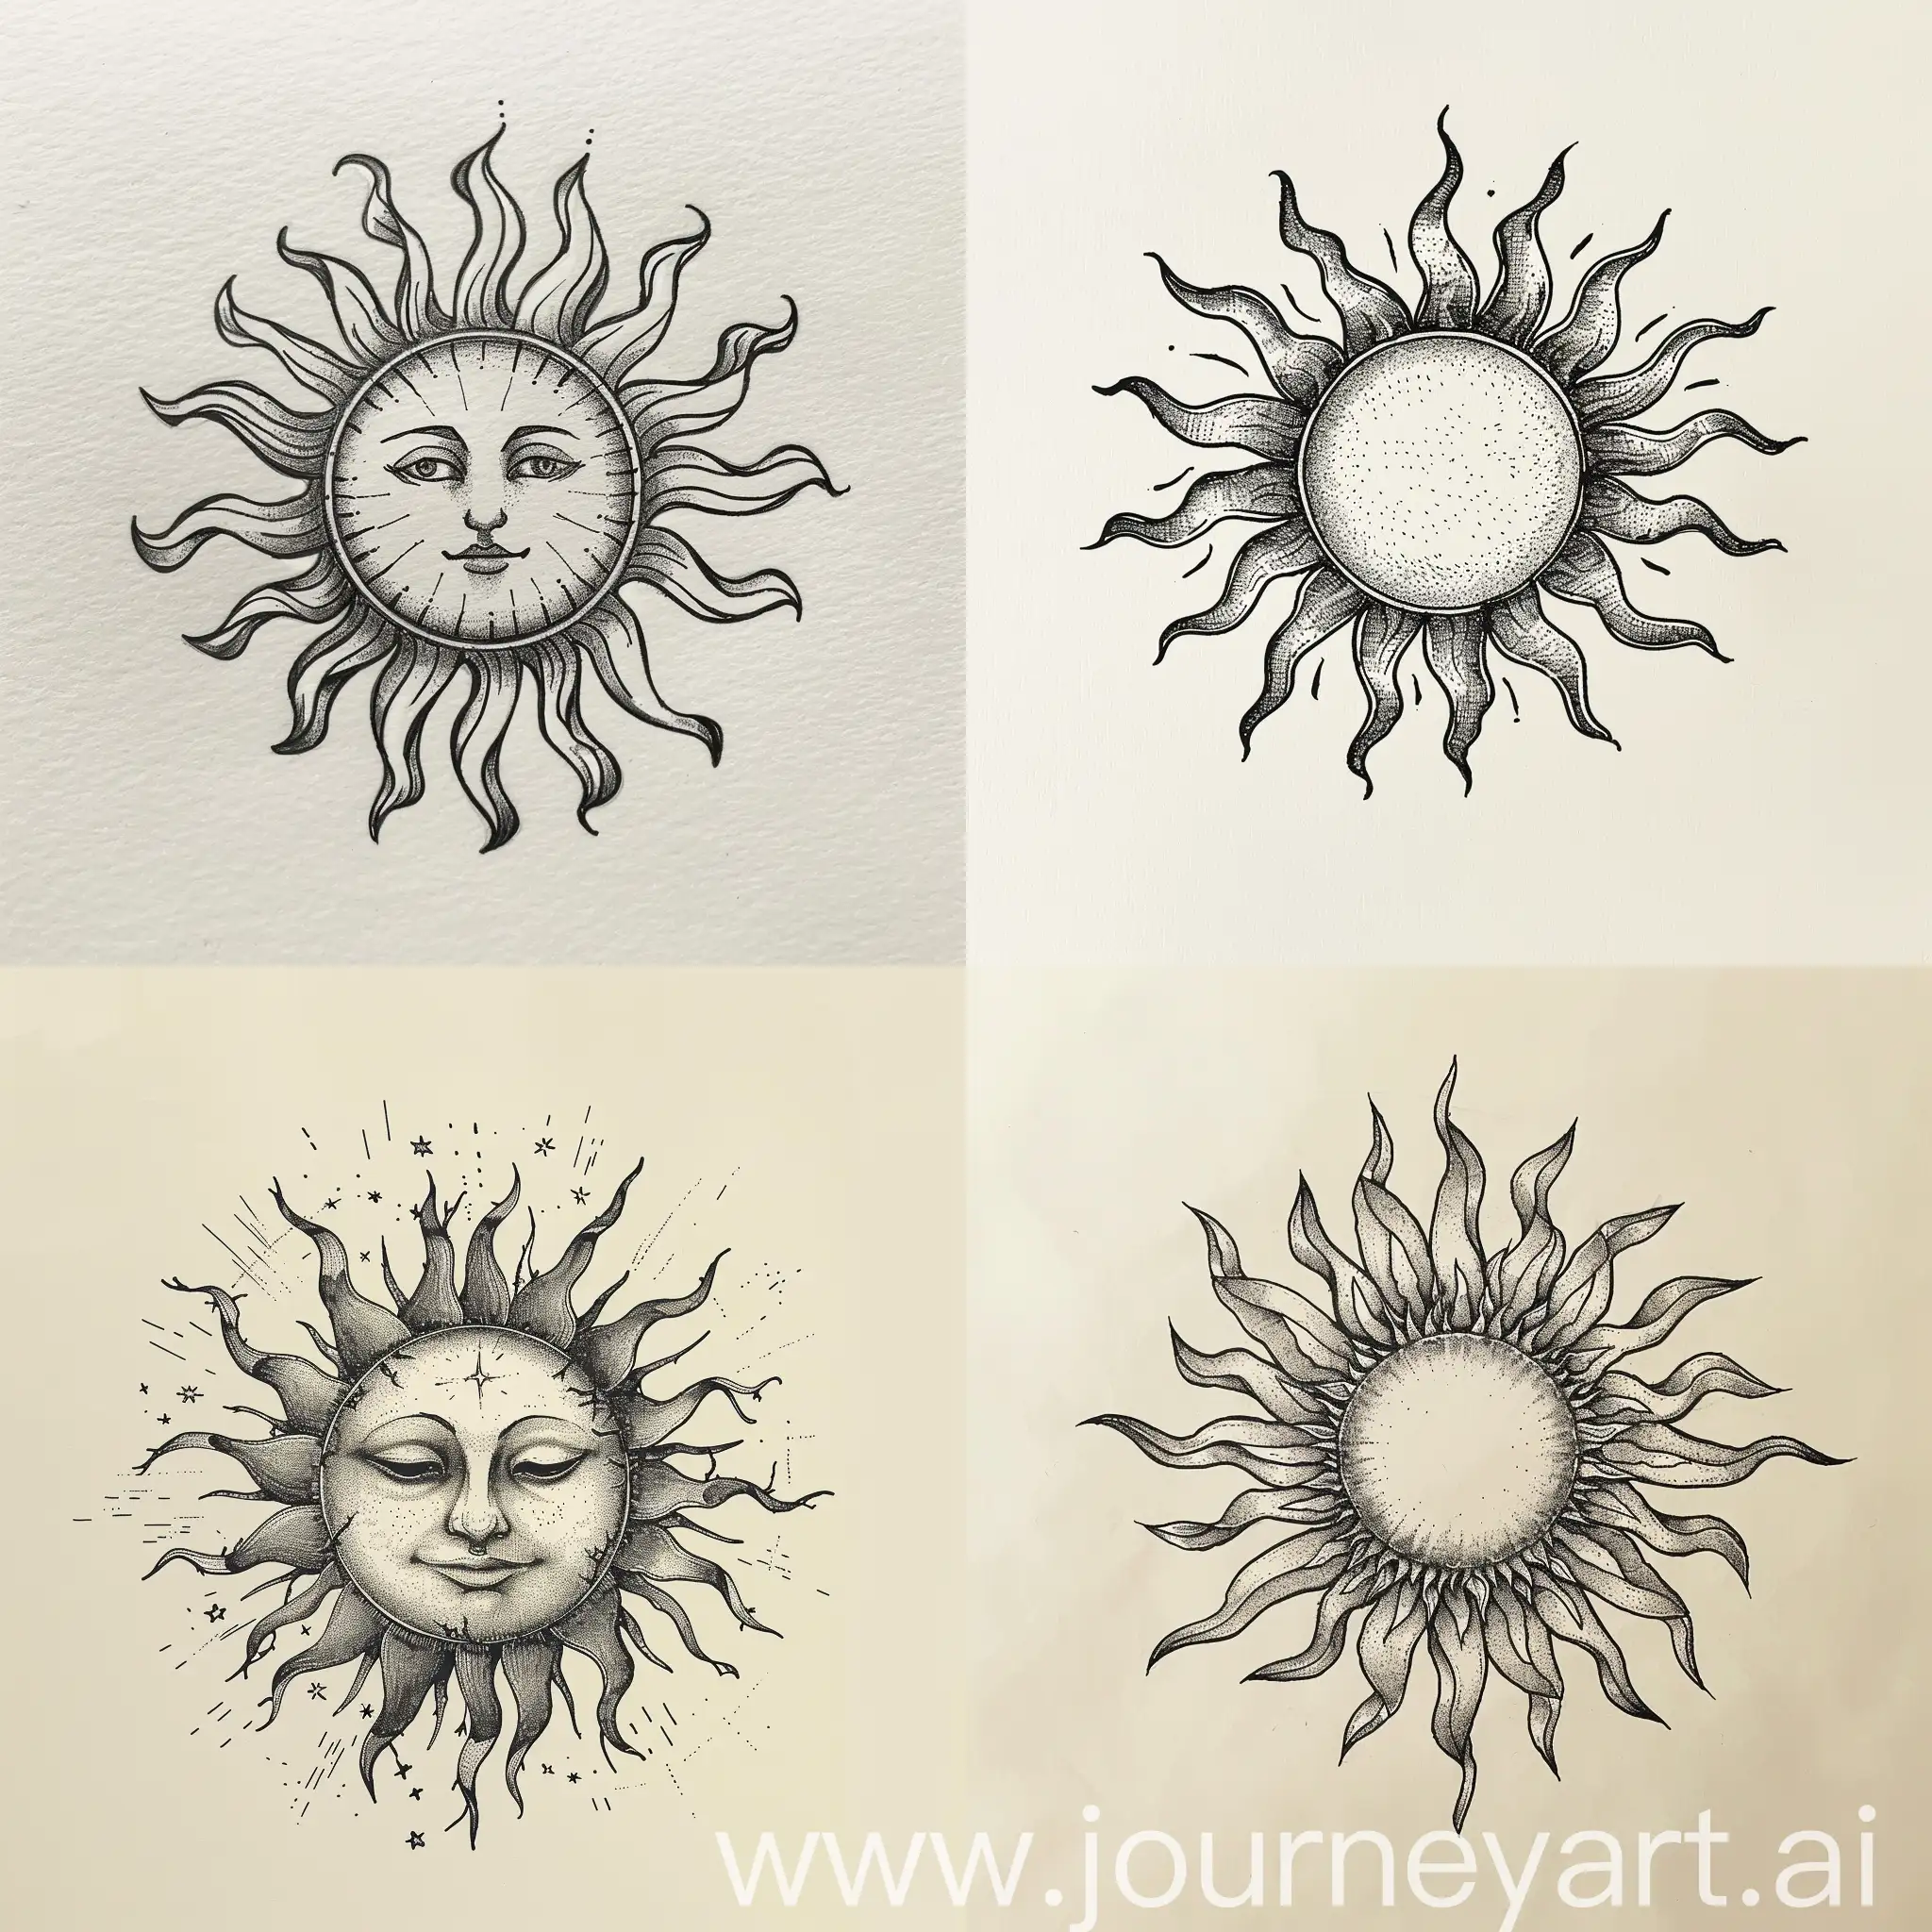 Minimalist-Sun-Illustration-with-Intricate-Details